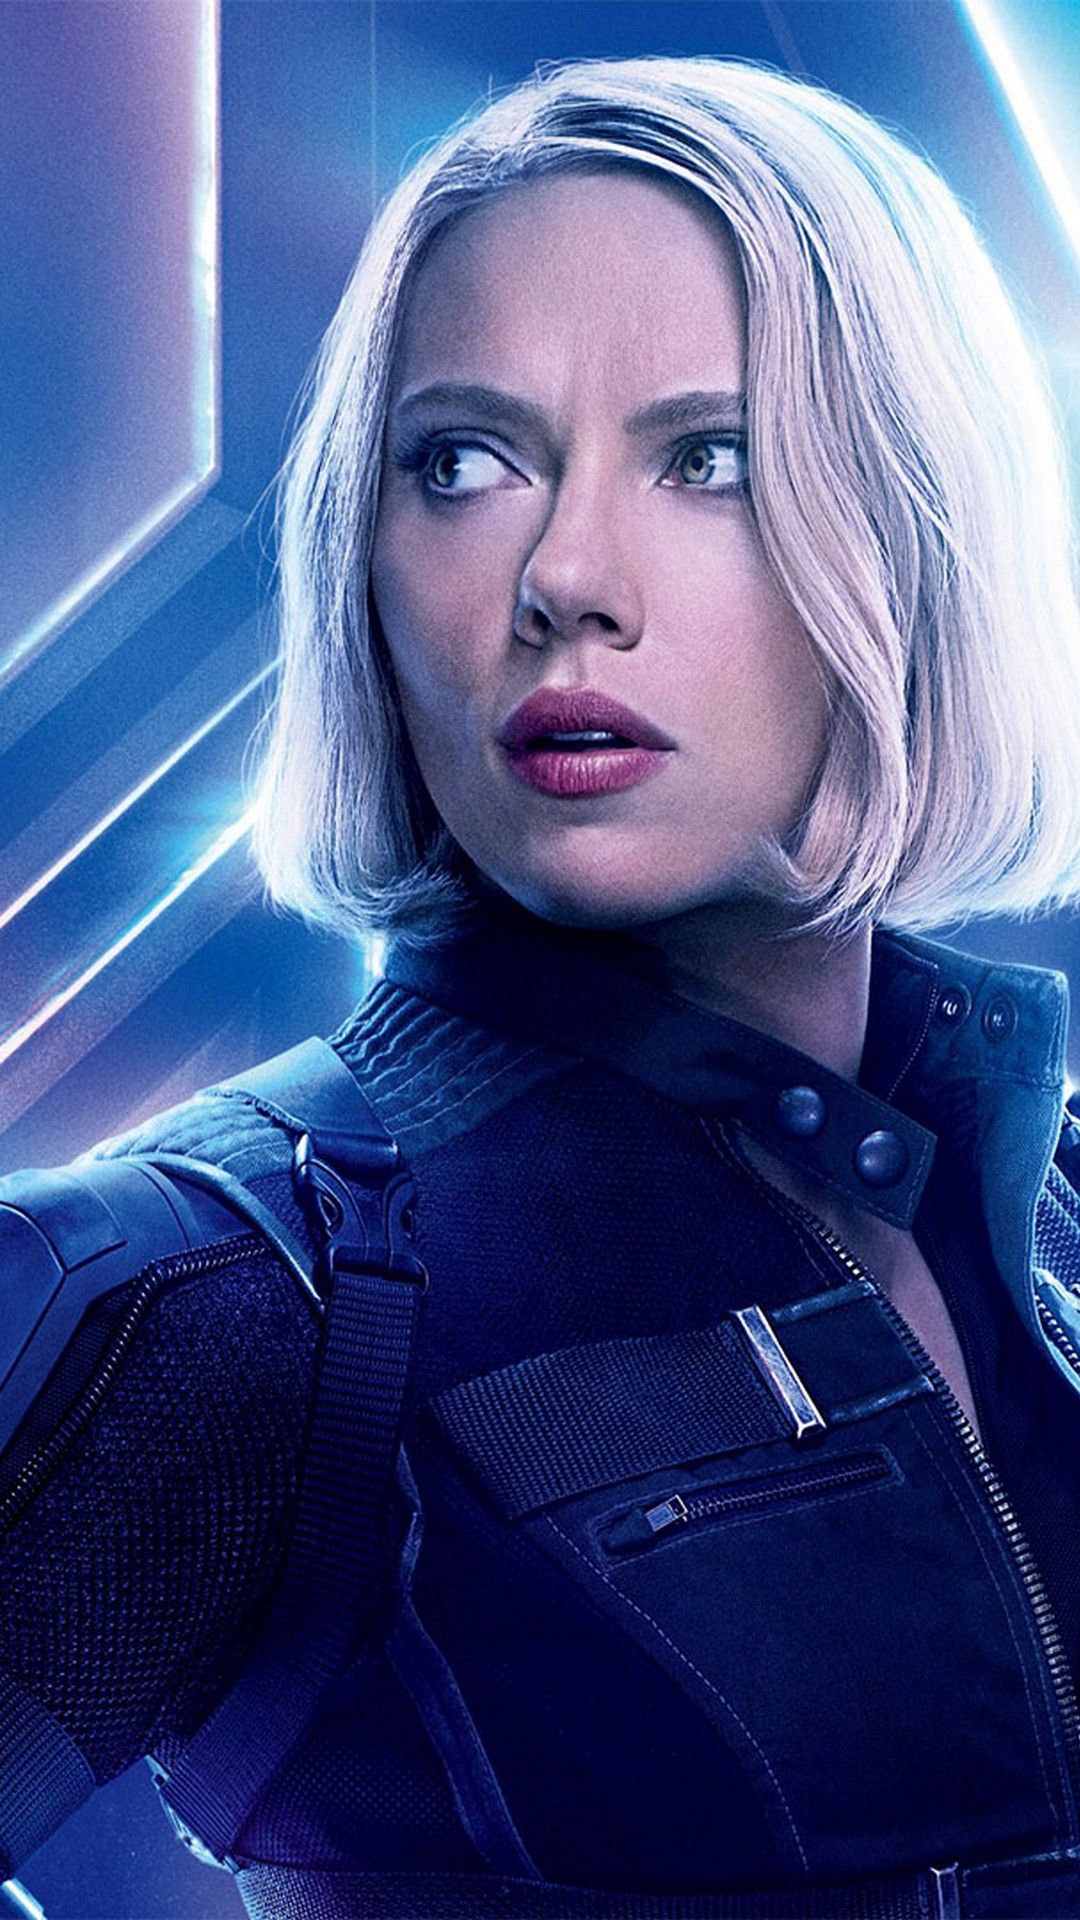 avengers wallpaper,eyebrow,lip,electric blue,blond,fictional character